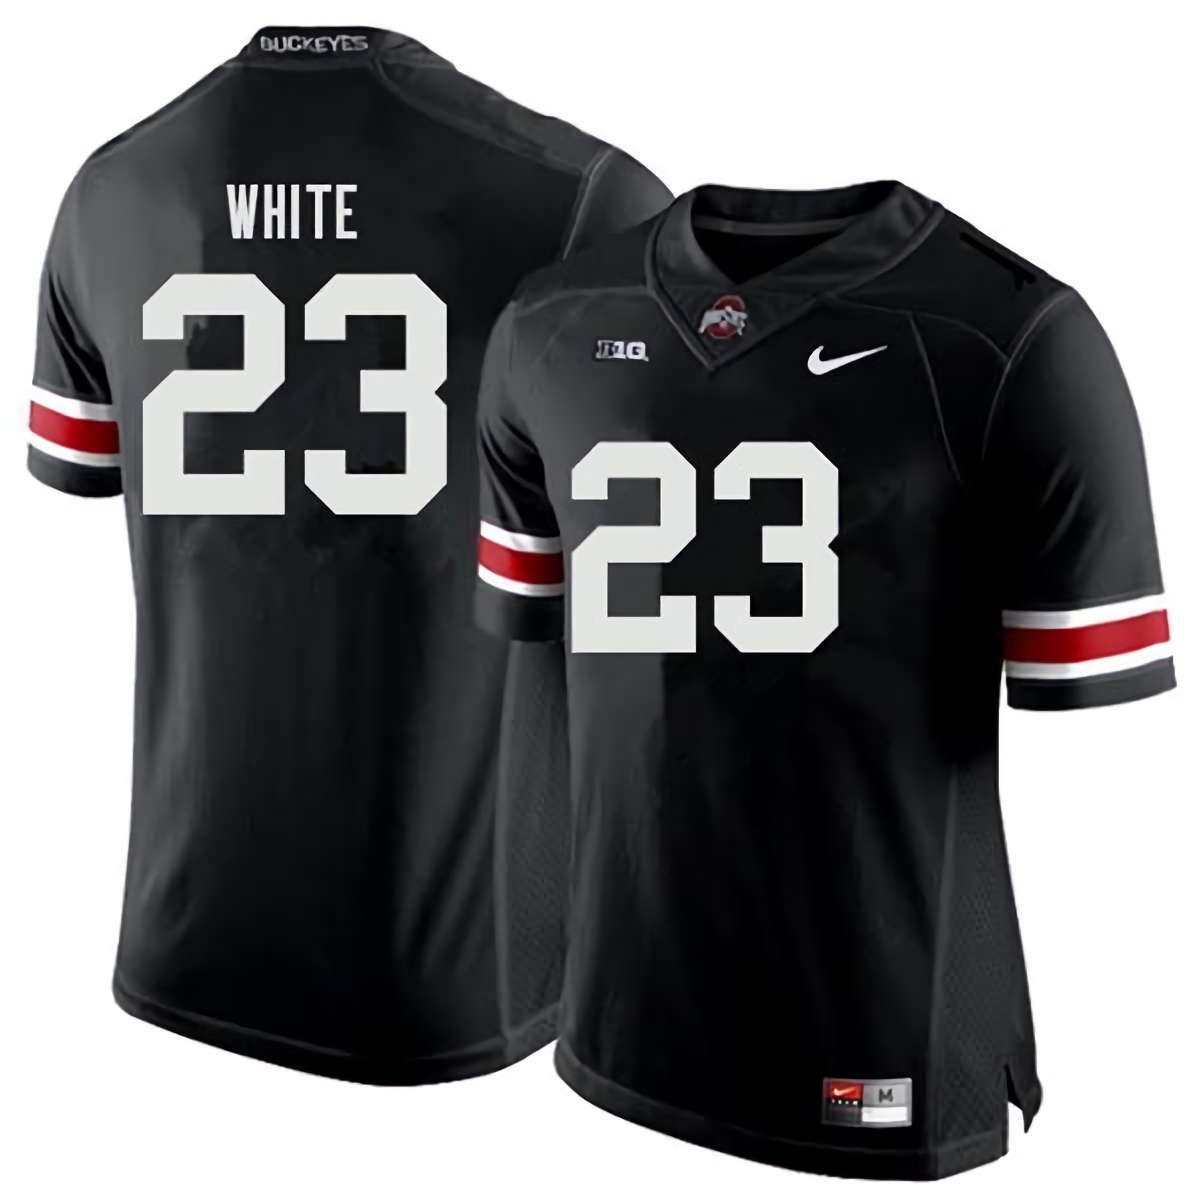 De'Shawn White Ohio State Buckeyes Men's NCAA #23 Nike Black College Stitched Football Jersey RUK1856KQ